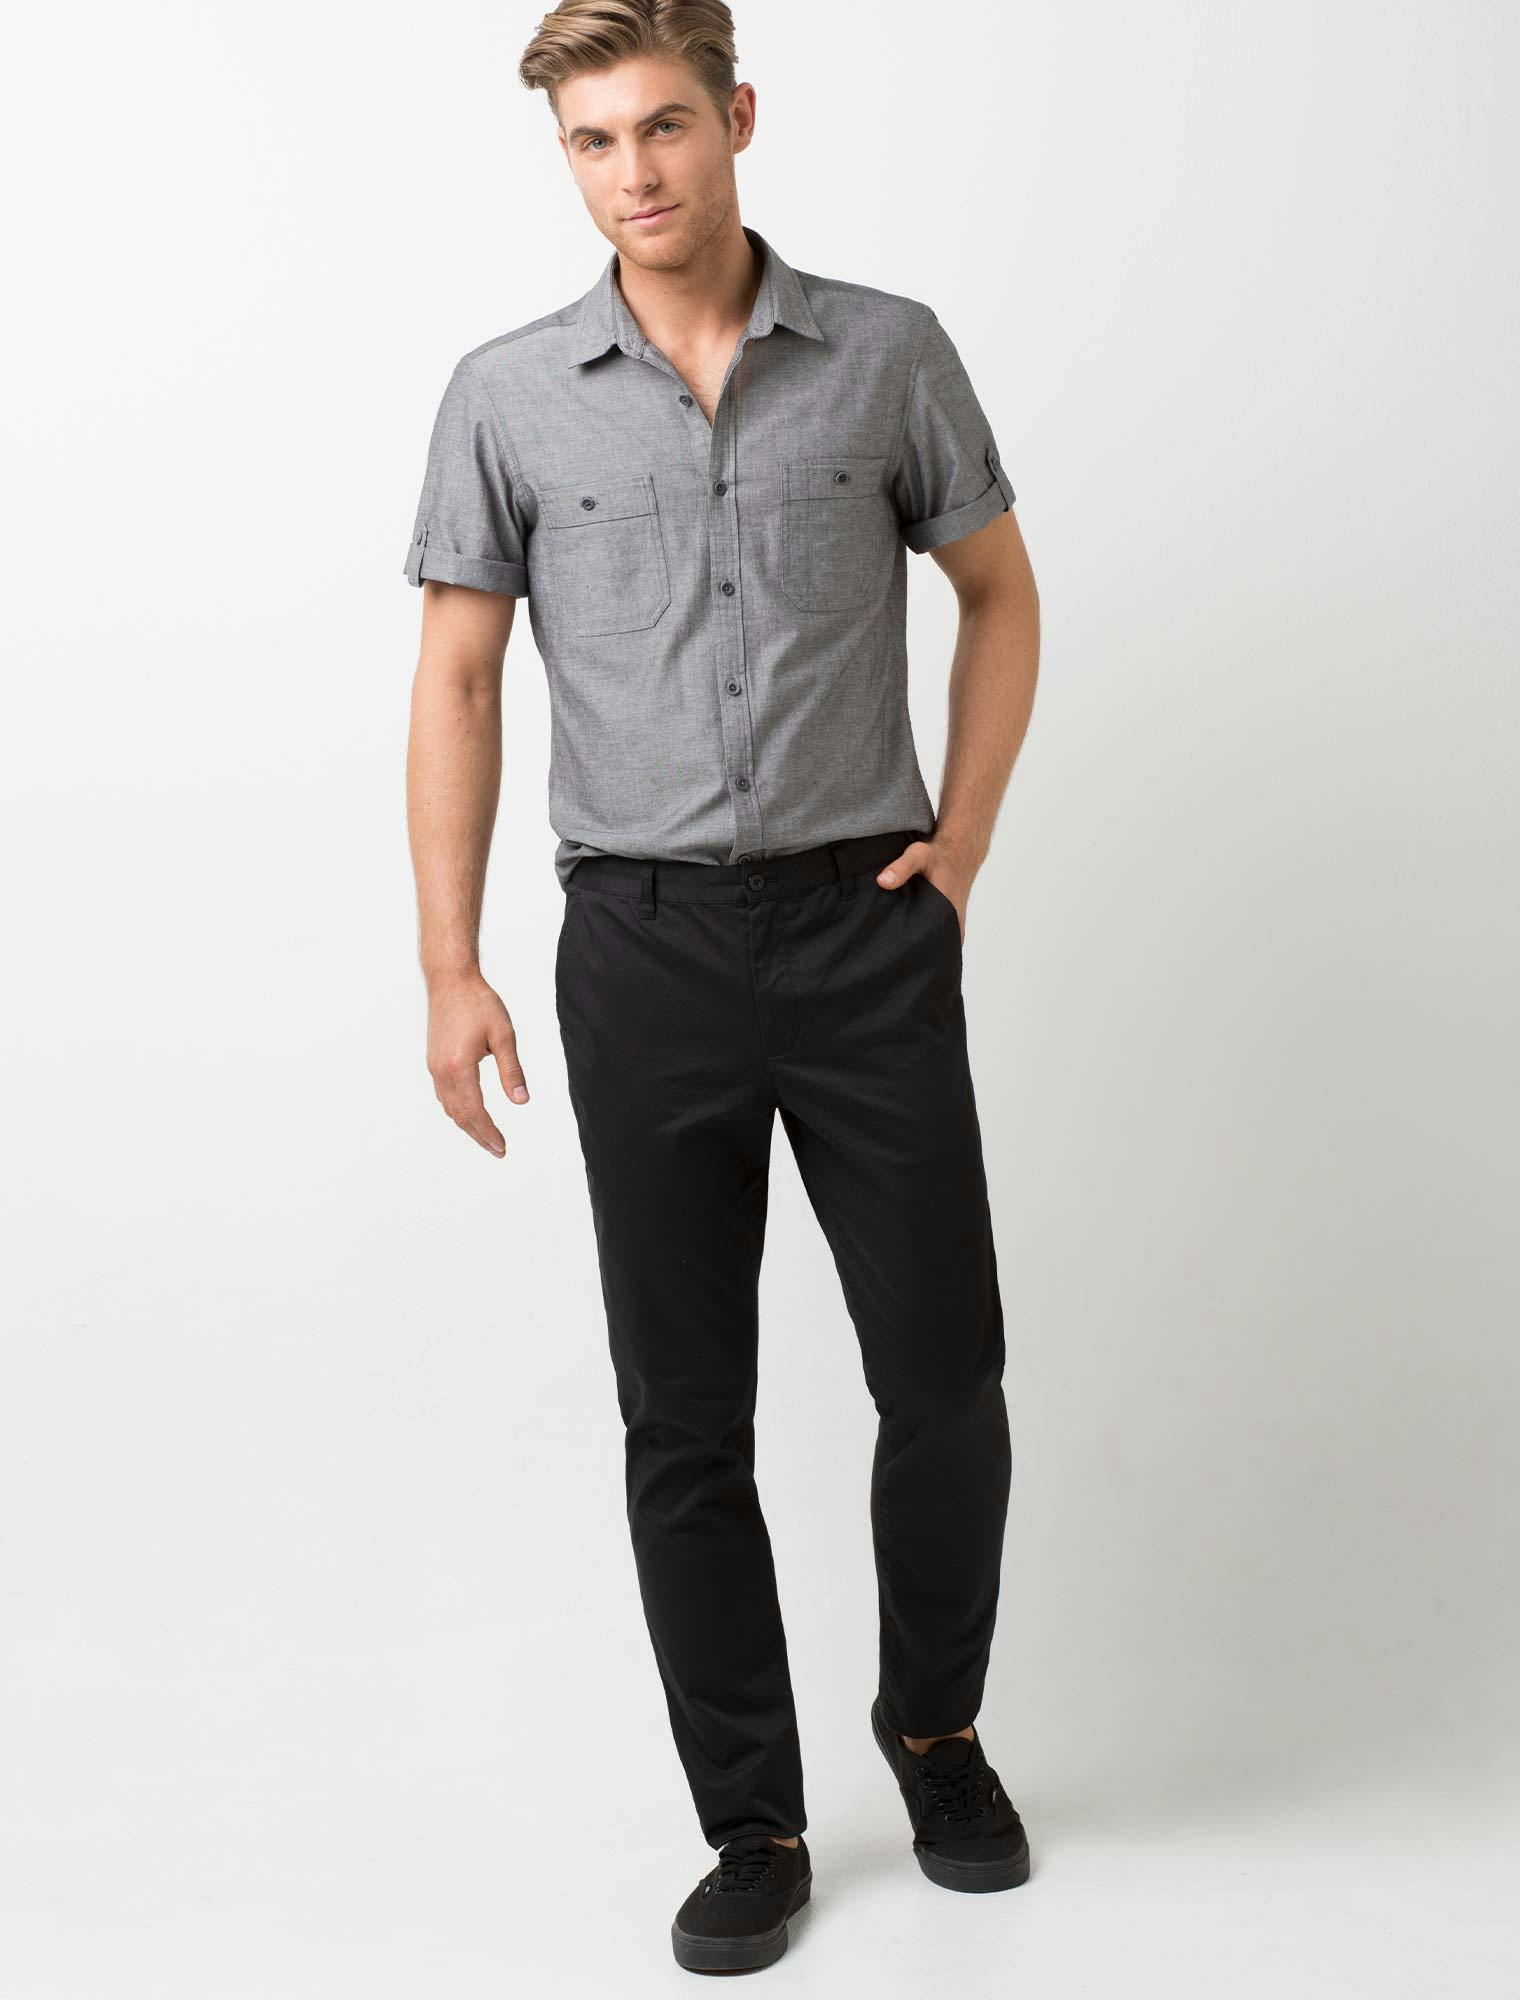 Men's Rex Utility Short Sleeve Shirt - Charcoal